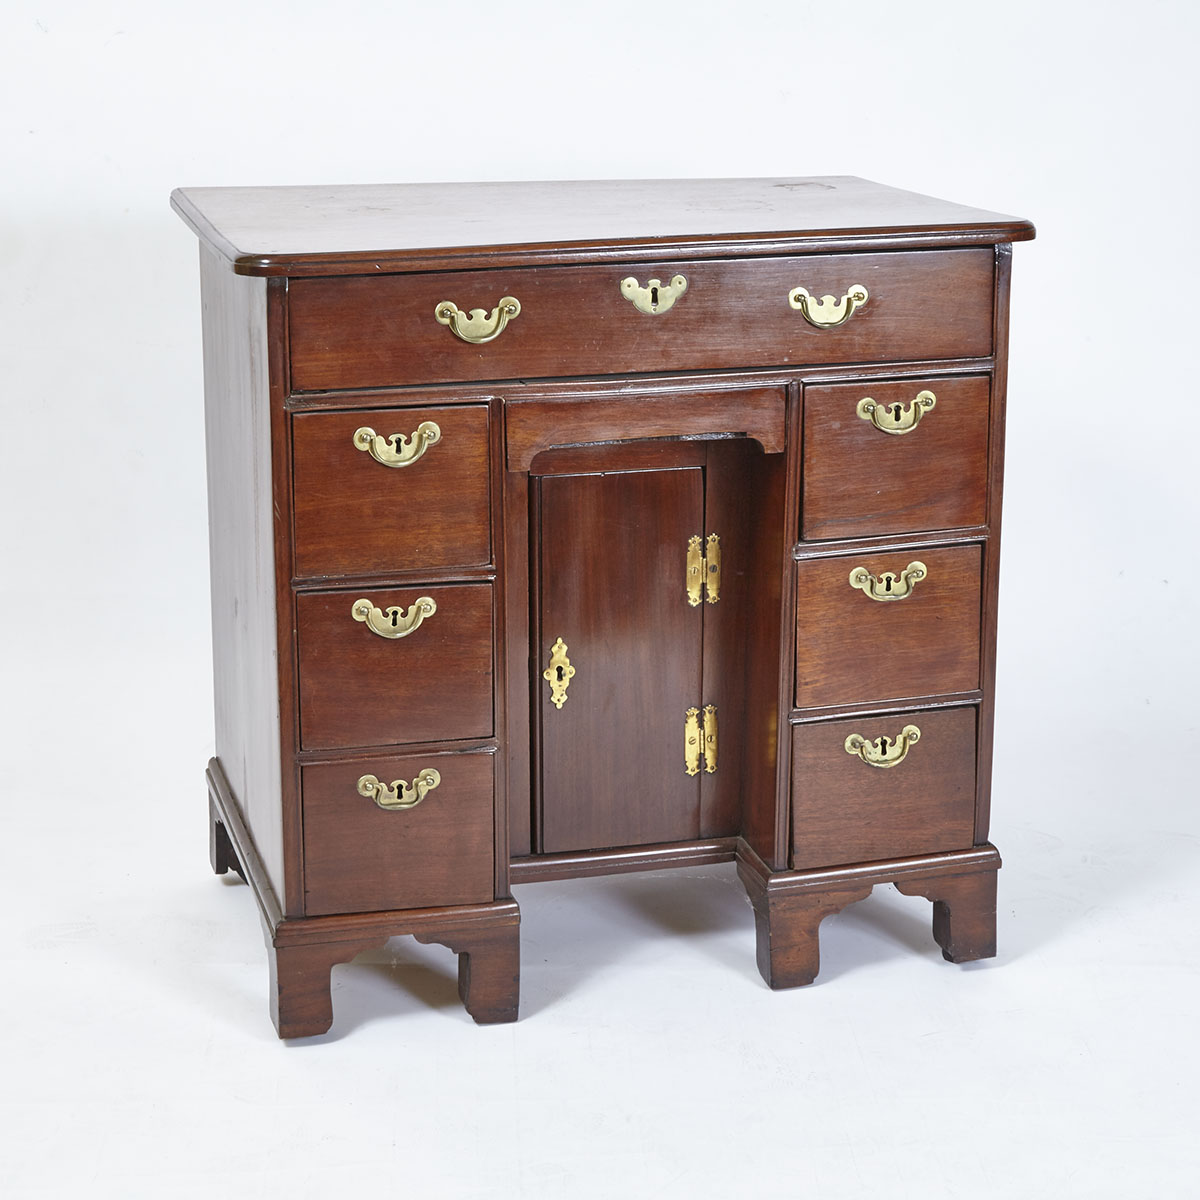 Georgian Style Mahogany Kneehole Desk, 19th century